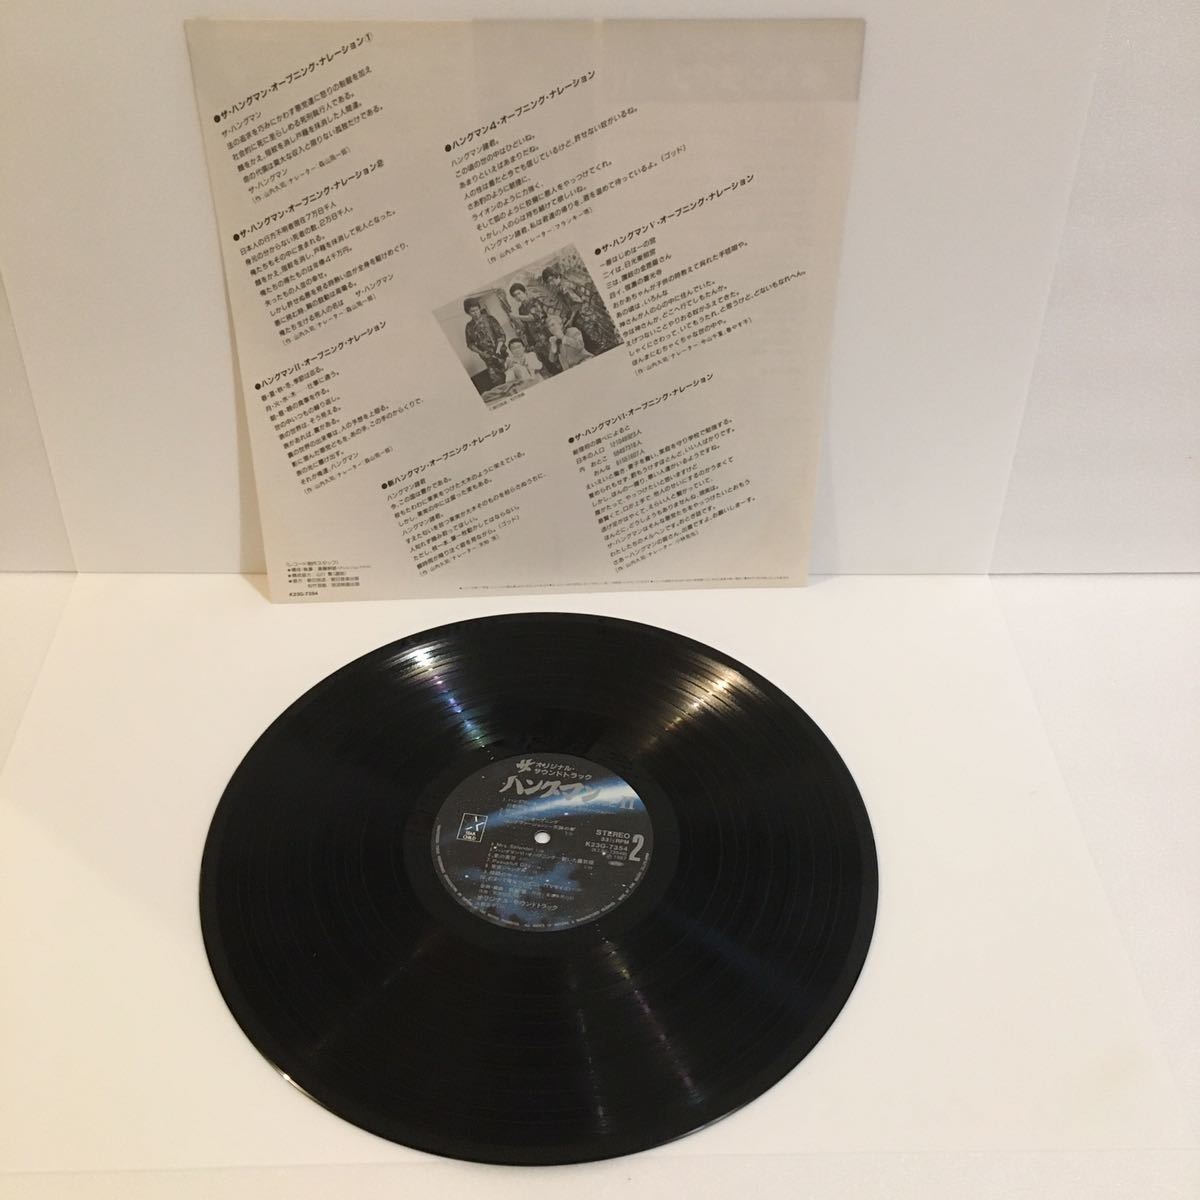  used record [ The hang man ] soundtrack 2 sheets appendix none /LP/... fire . regular flat hi Roth ke/ analogue / retro / Showa Retro 